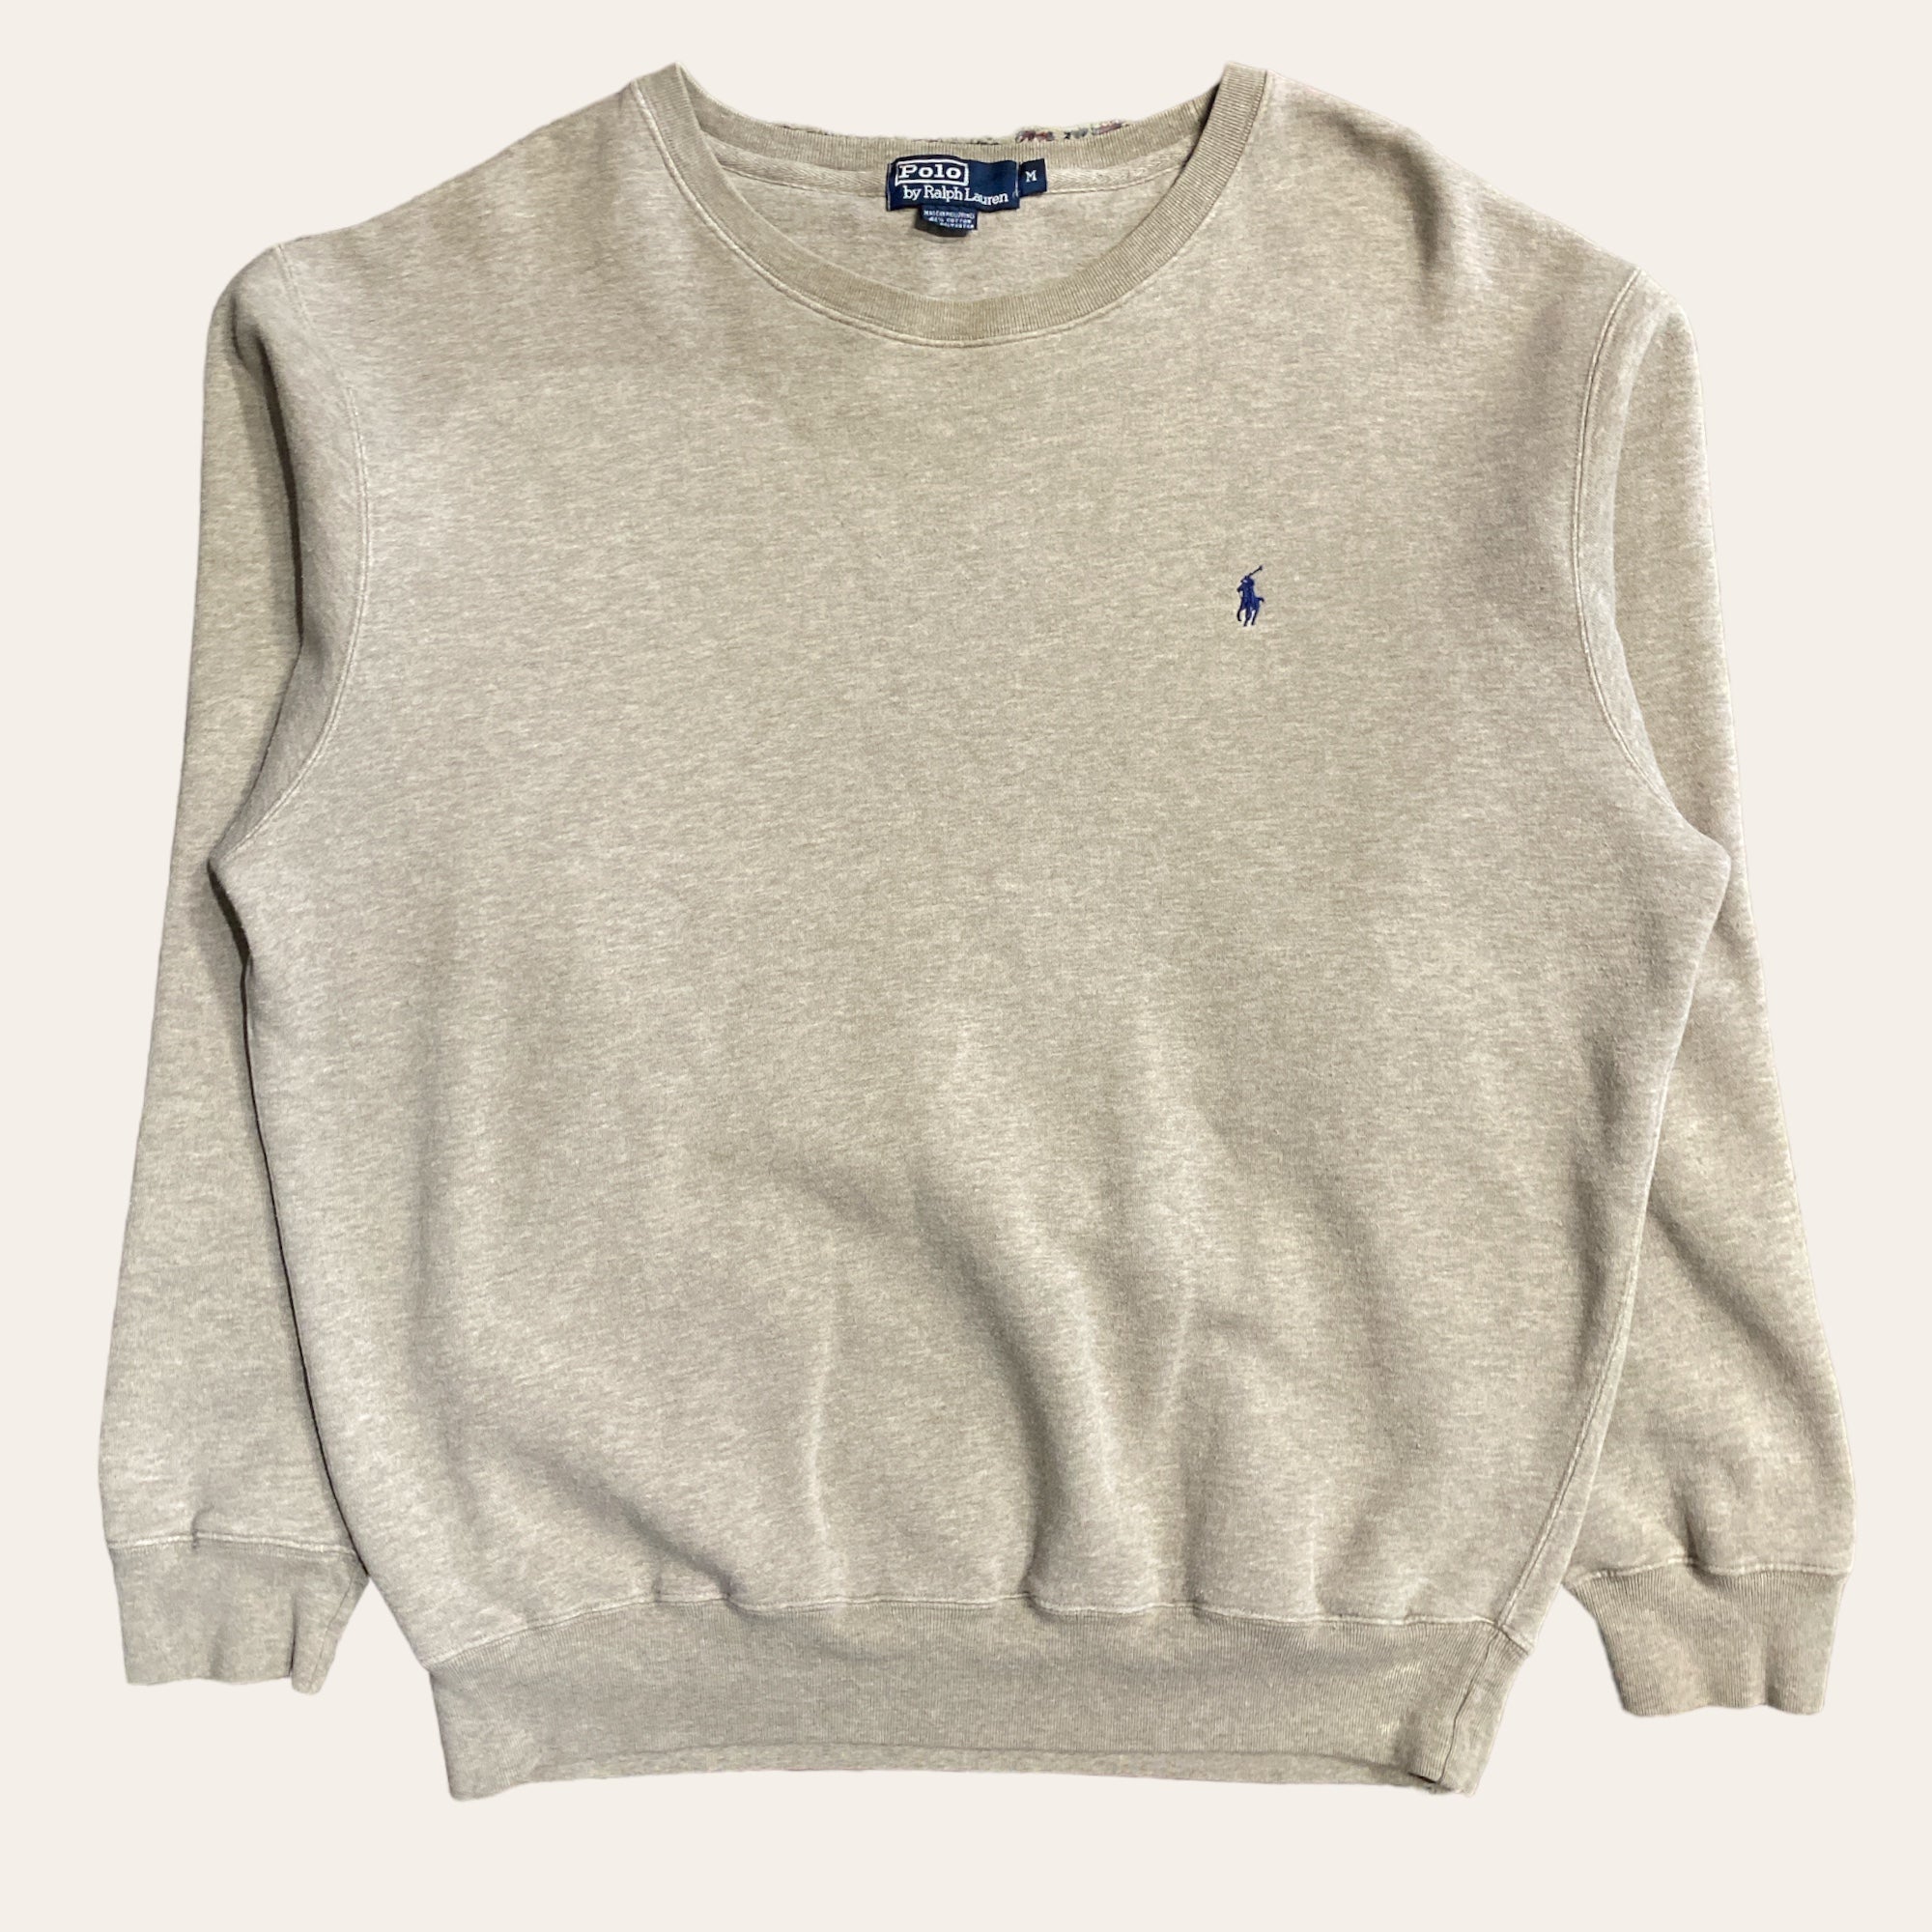 Ralph Lauren Sweater Cream Size M